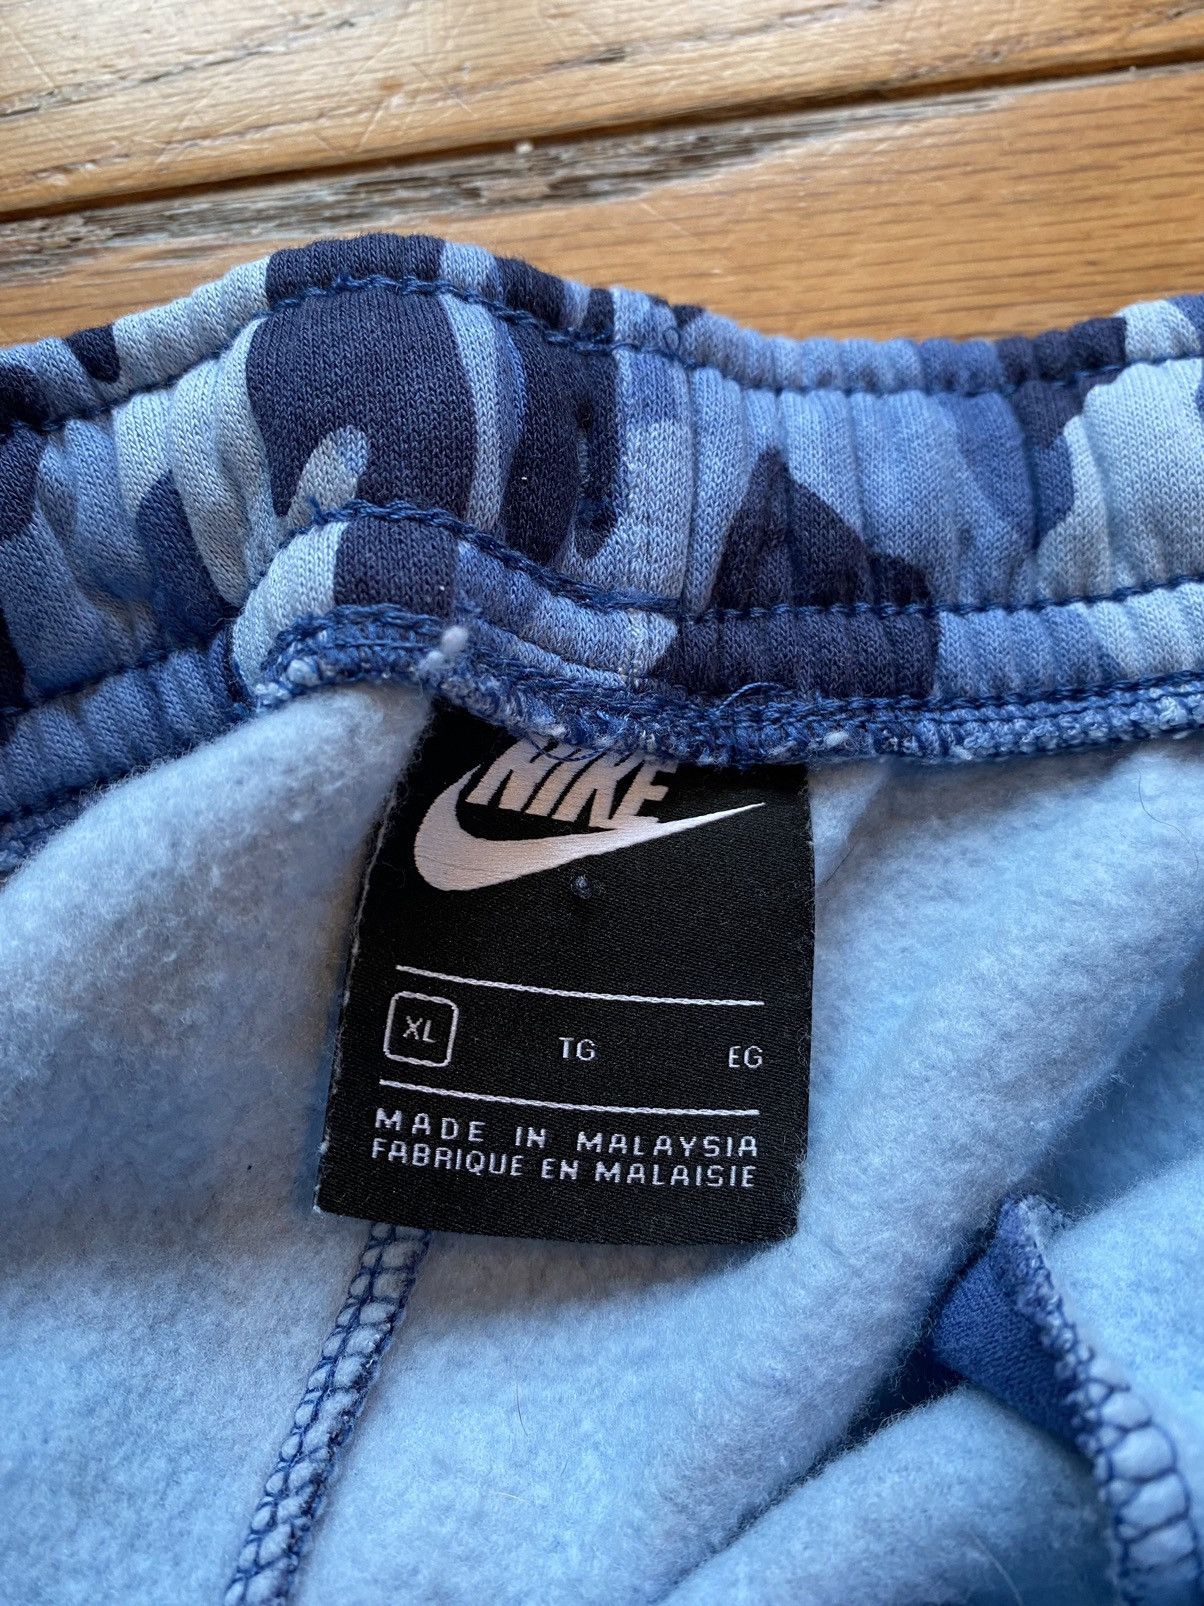 Nike Nike Blue Camo Sweatpants Size US 34 / EU 50 - 3 Preview